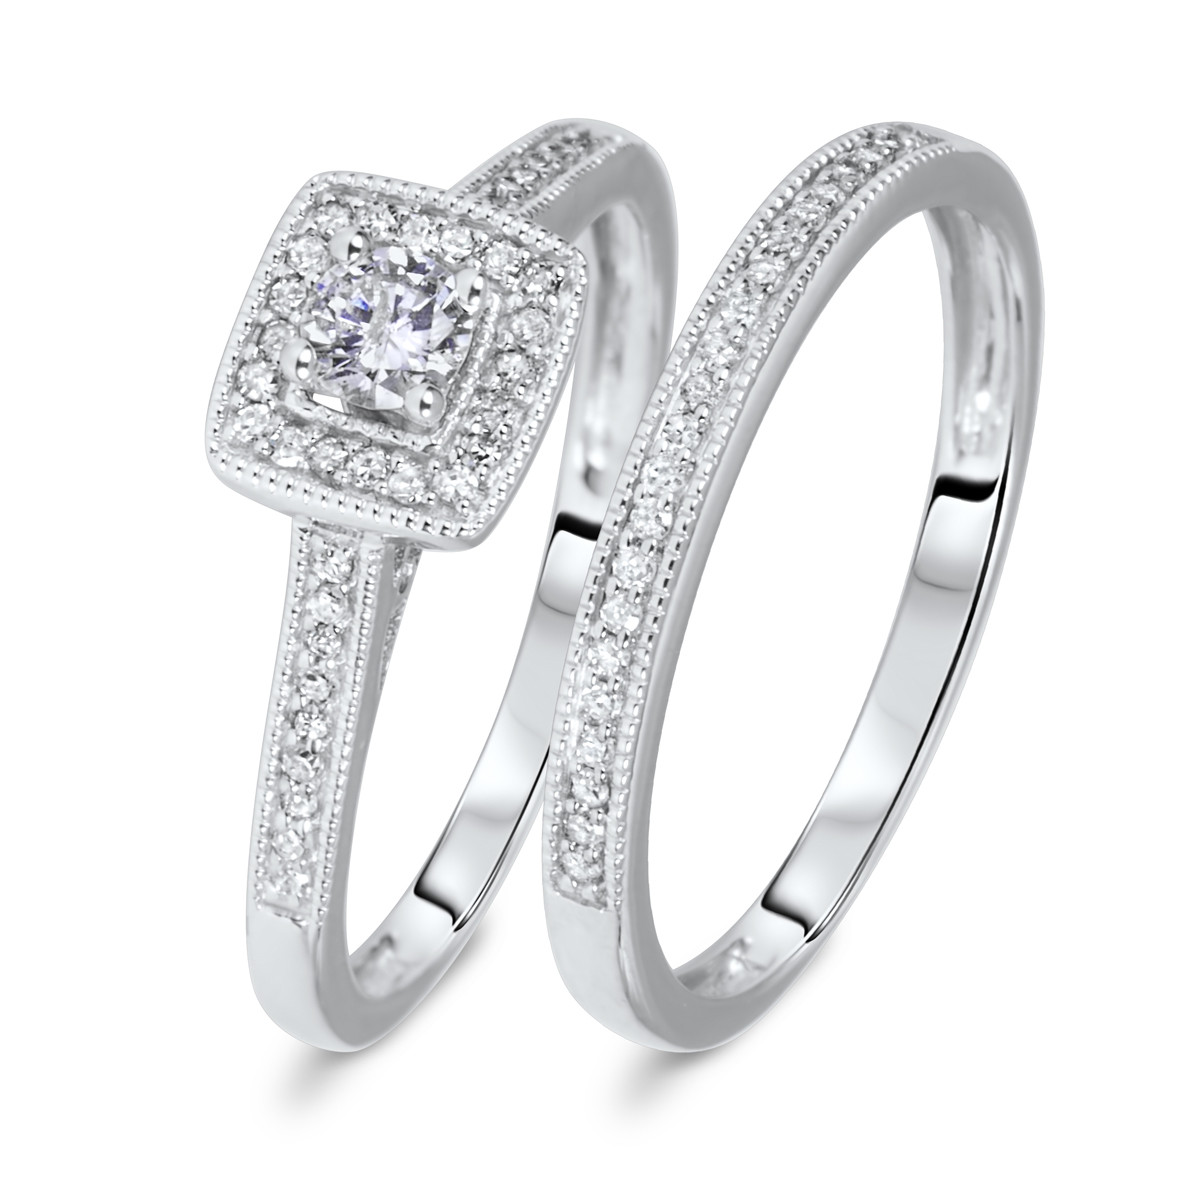 White Gold Wedding Rings Sets
 1 1 3 CT T W Round Cut Diamond La s Bridal Wedding